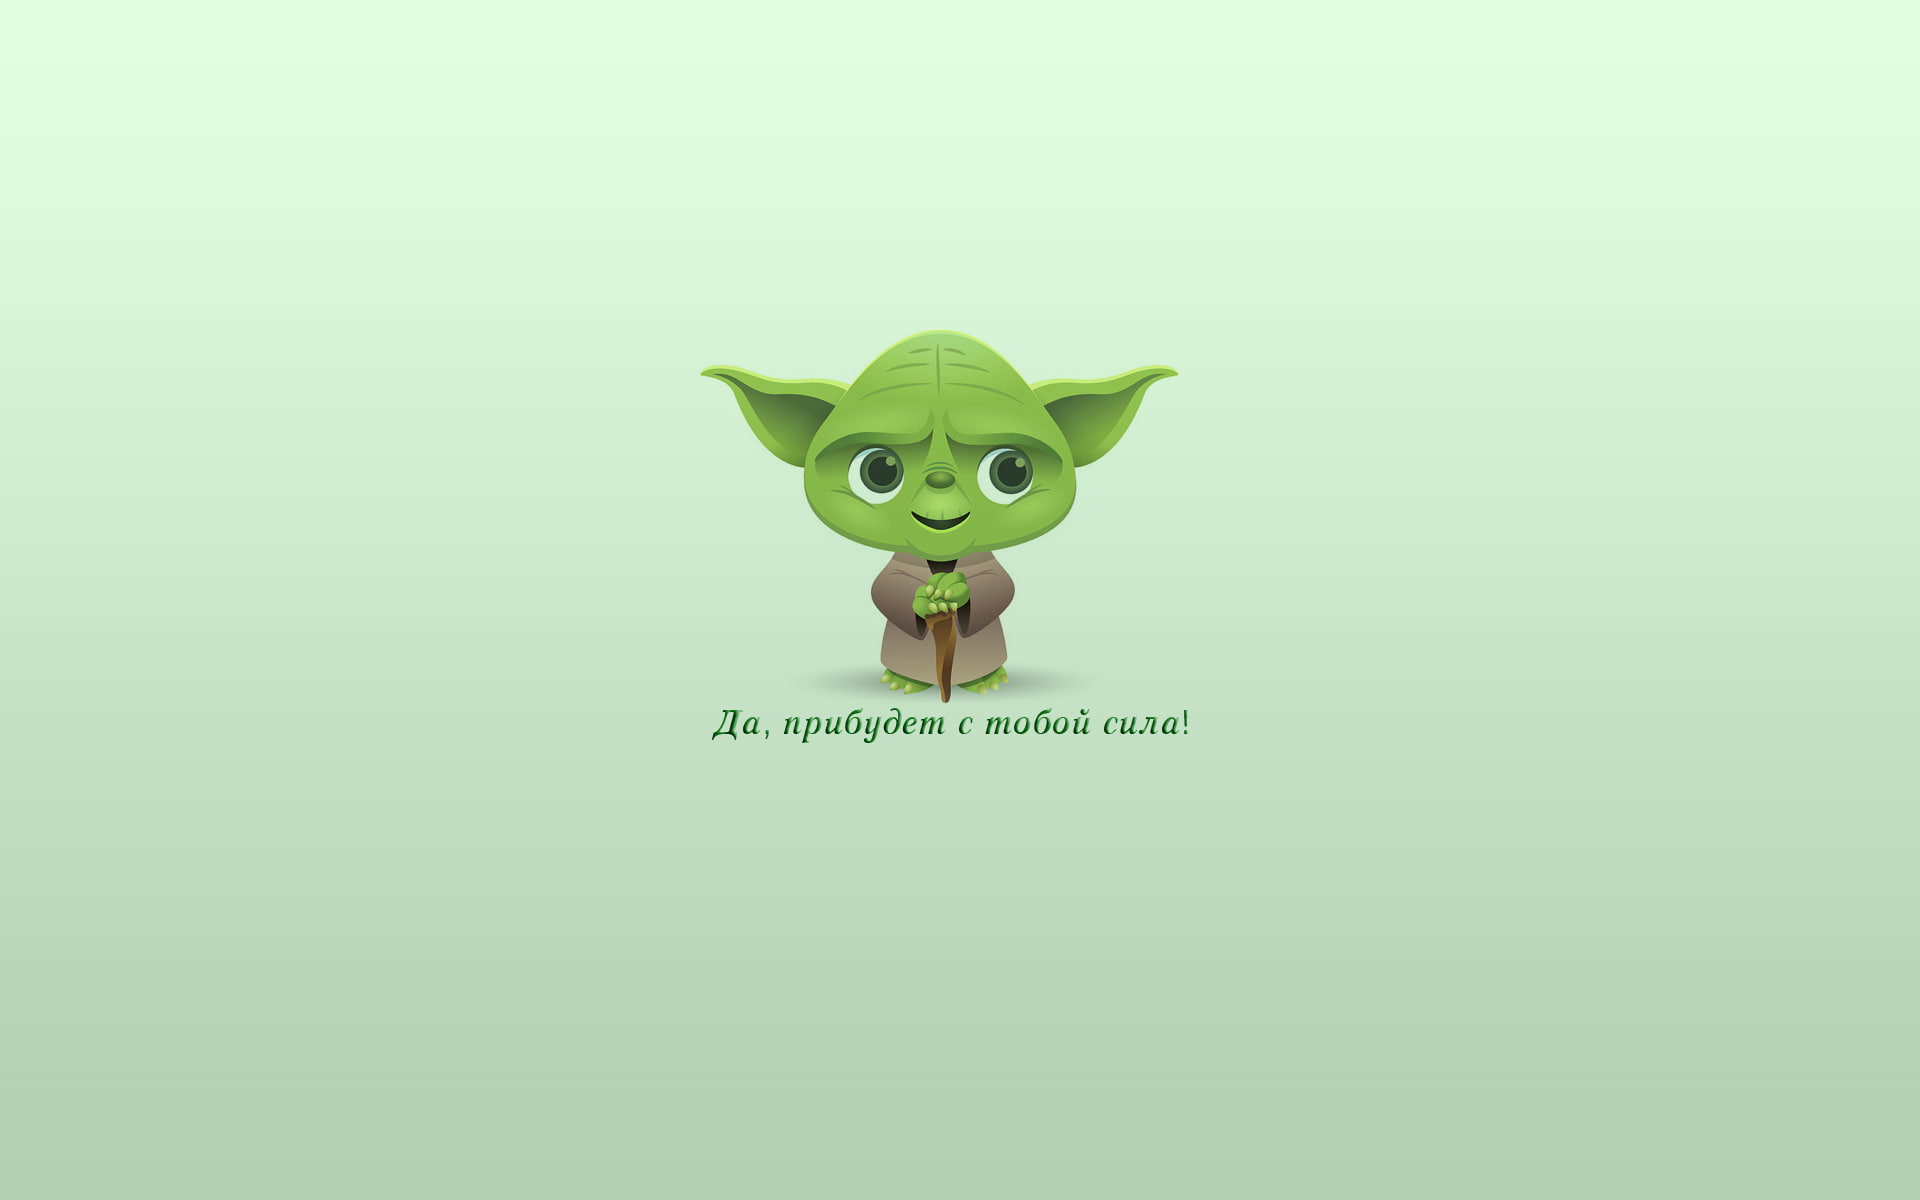 Stars Wars Master Yoda illustration, green, the inscription, minimalism